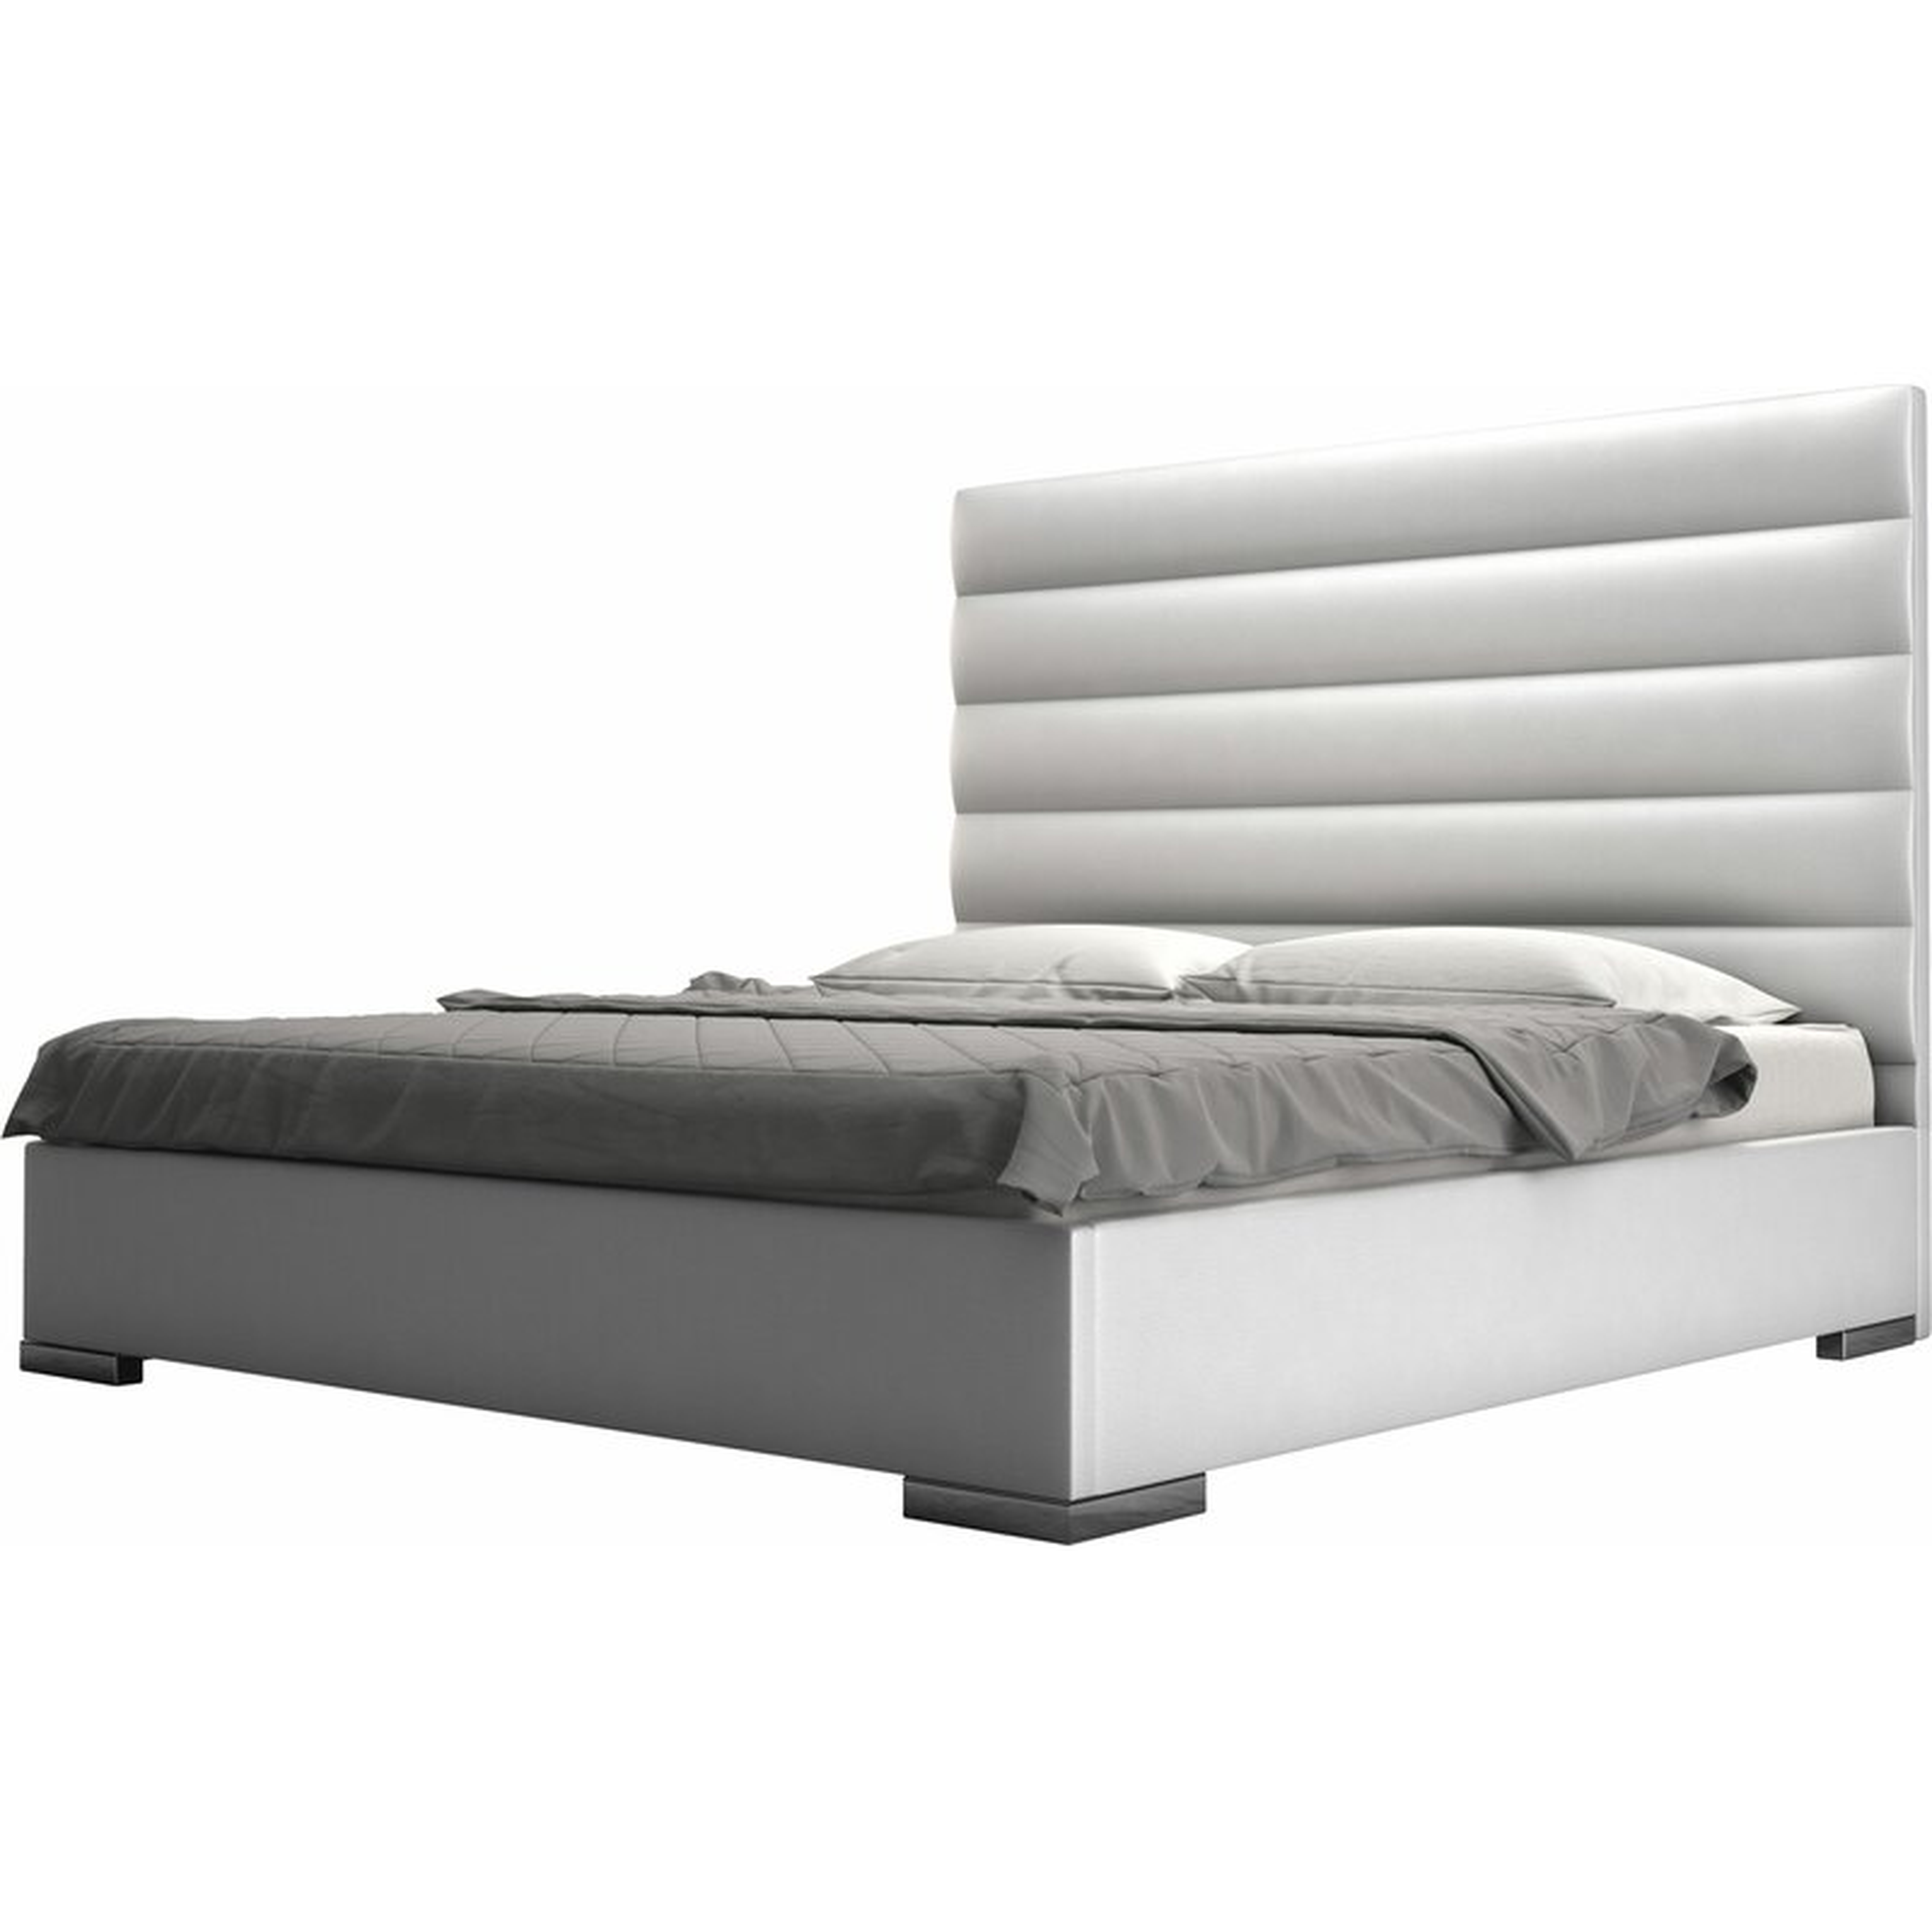 Instinct Tufted Upholstered Low Profile Platform Bed-White - Wayfair